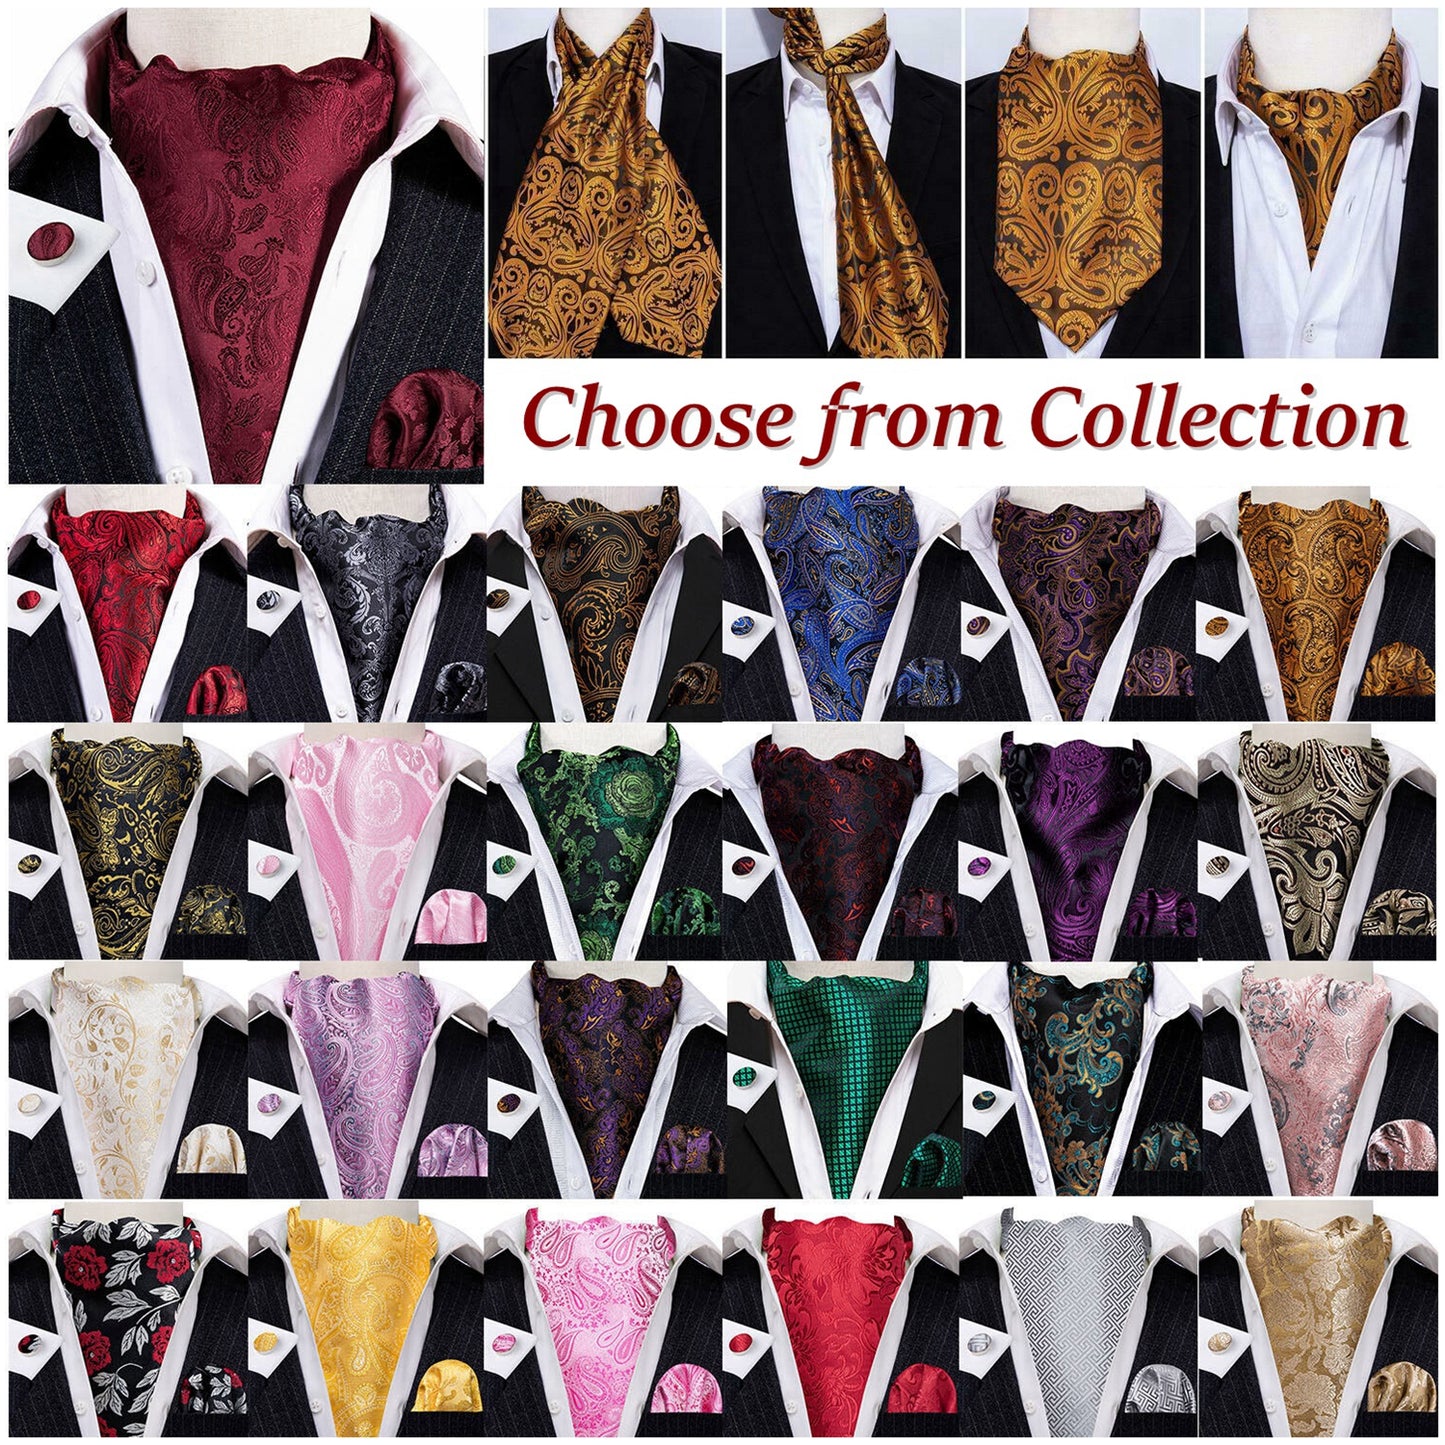 Victorian Ascot Silky Floral Day Cravat Set [Royal Paisley]